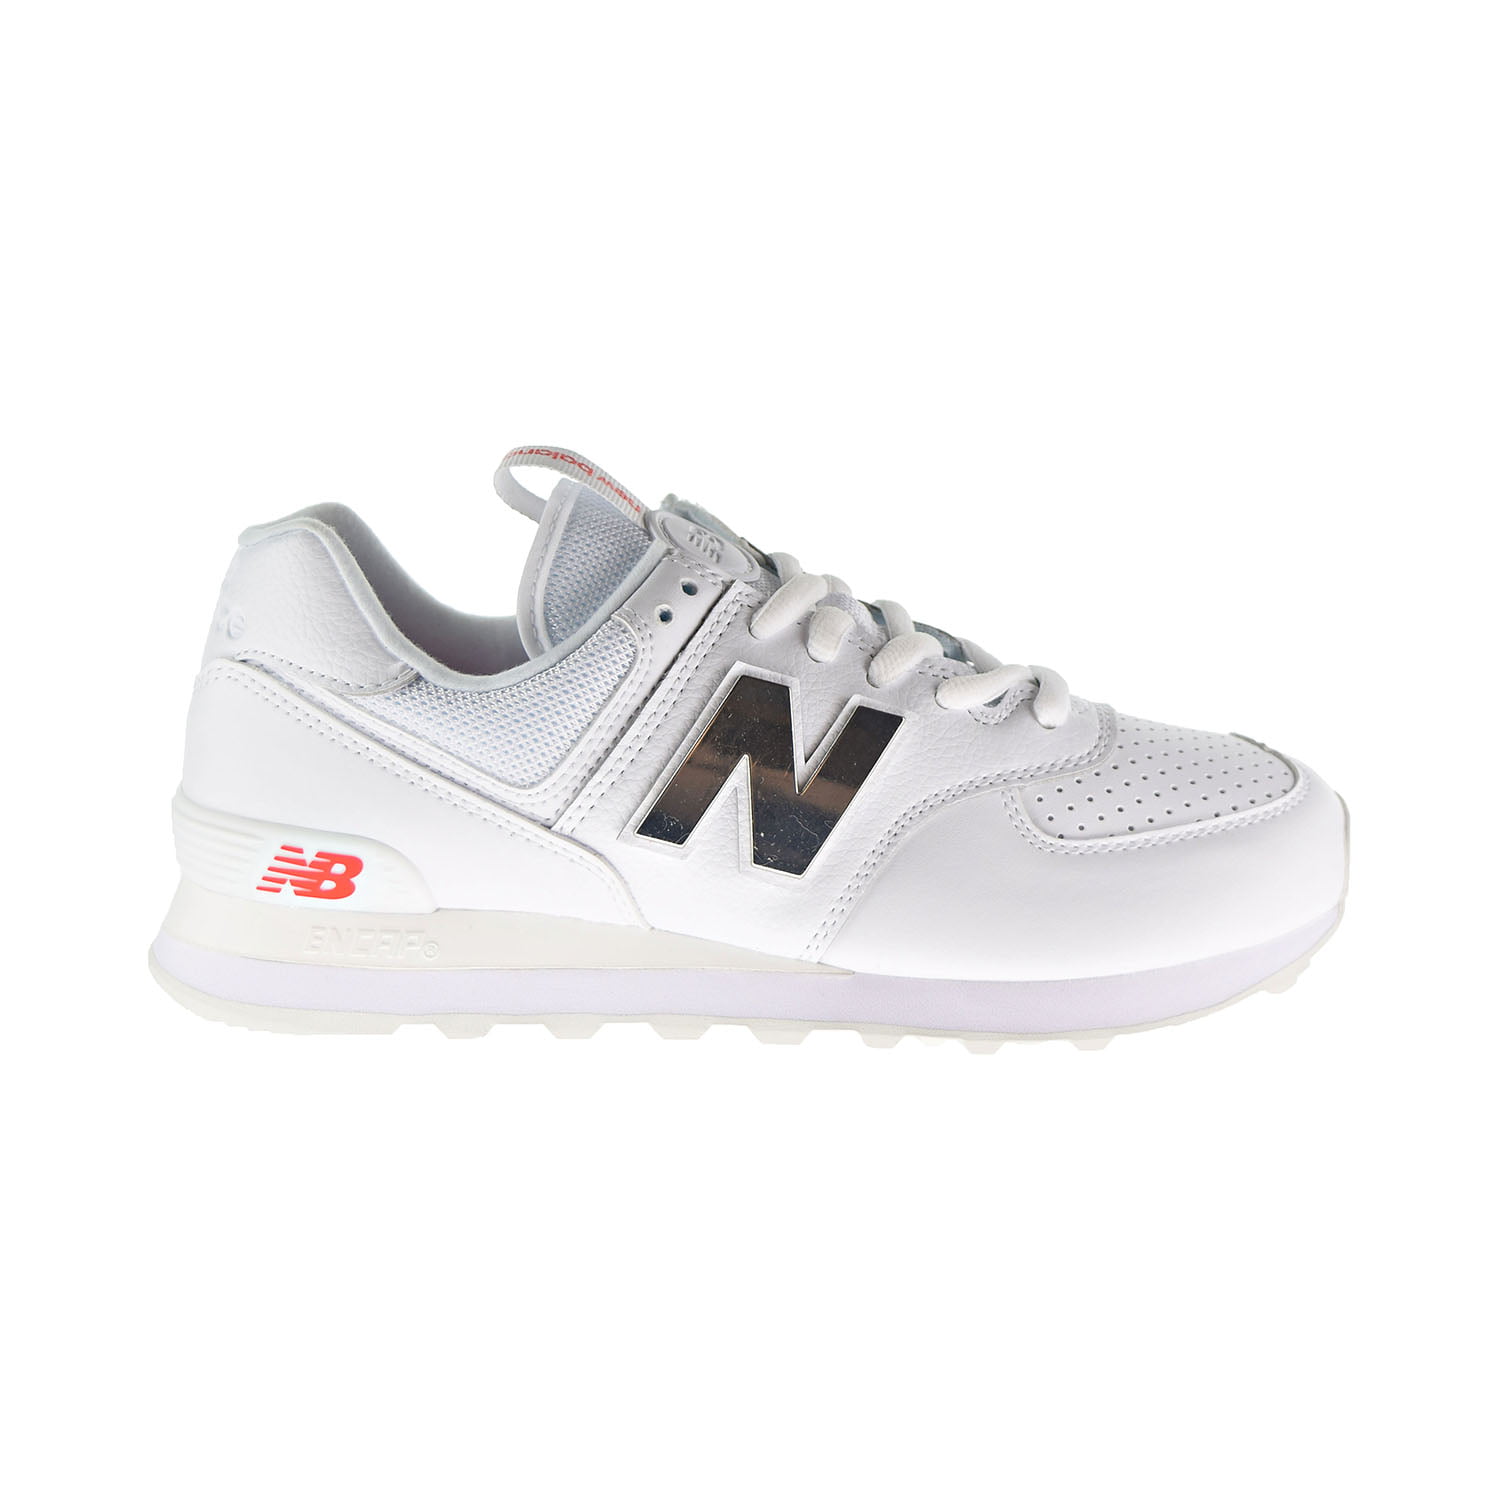 New Balance Classics 574 Metallic Men's Shoes White/Neo Flame ml574-sox